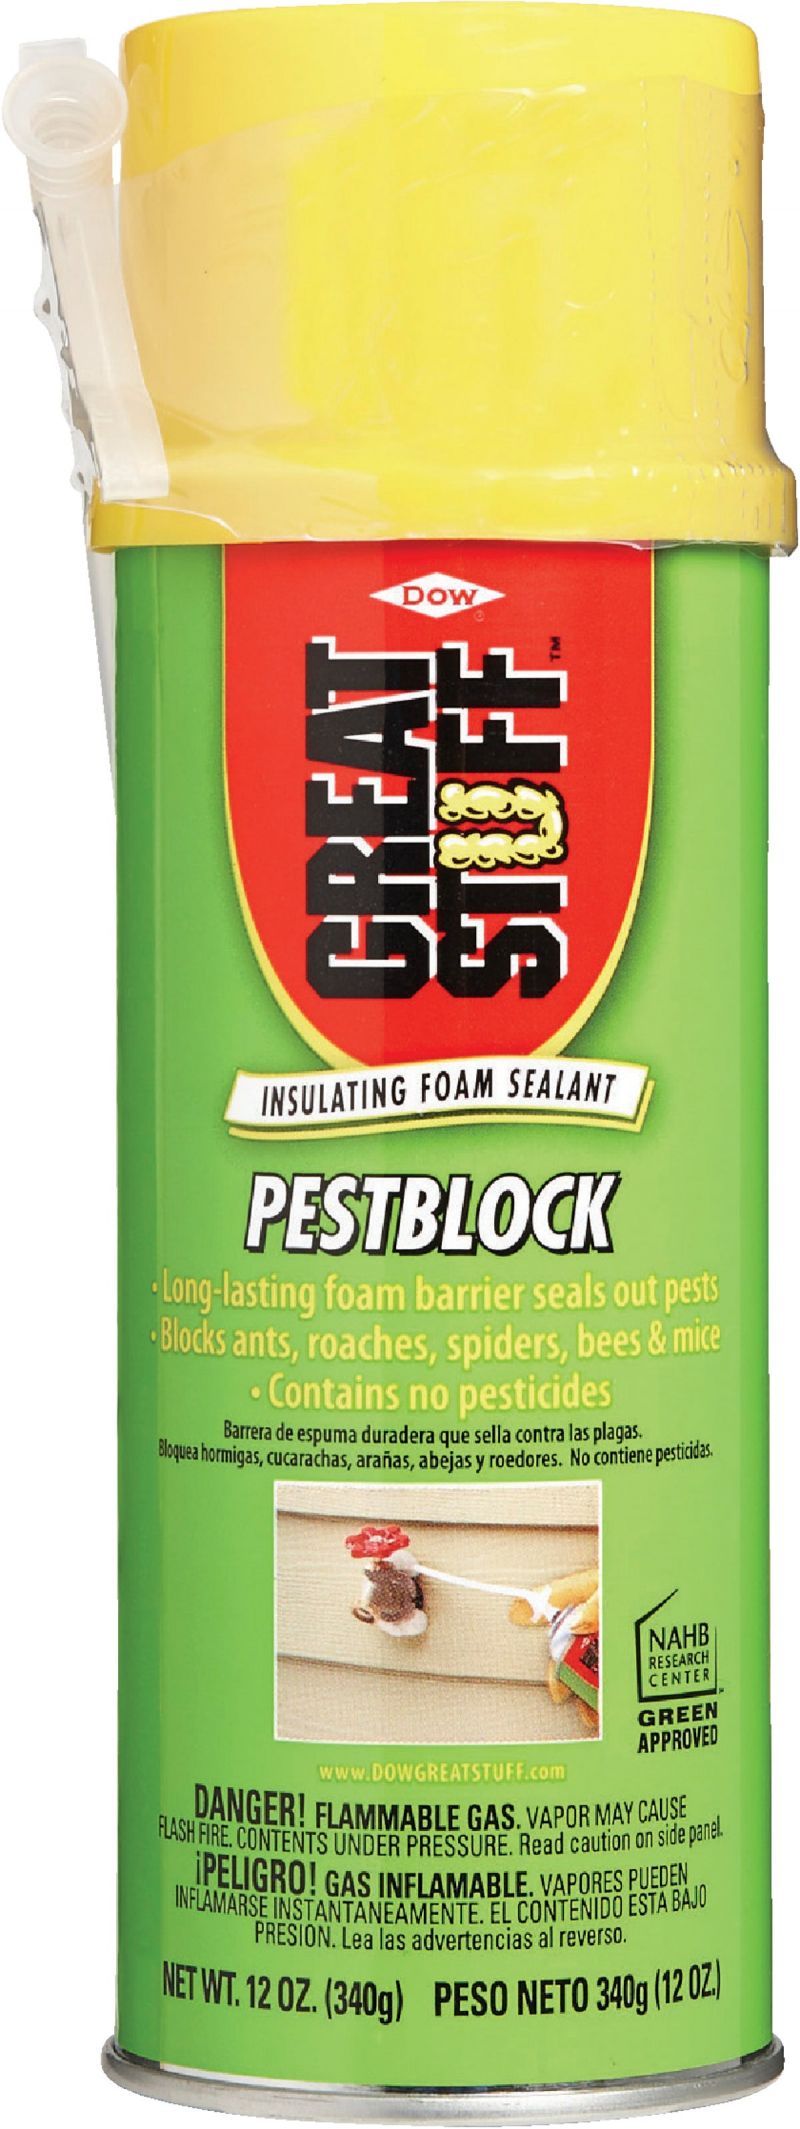 Pestblock Insulating Foam 12 oz - Grey